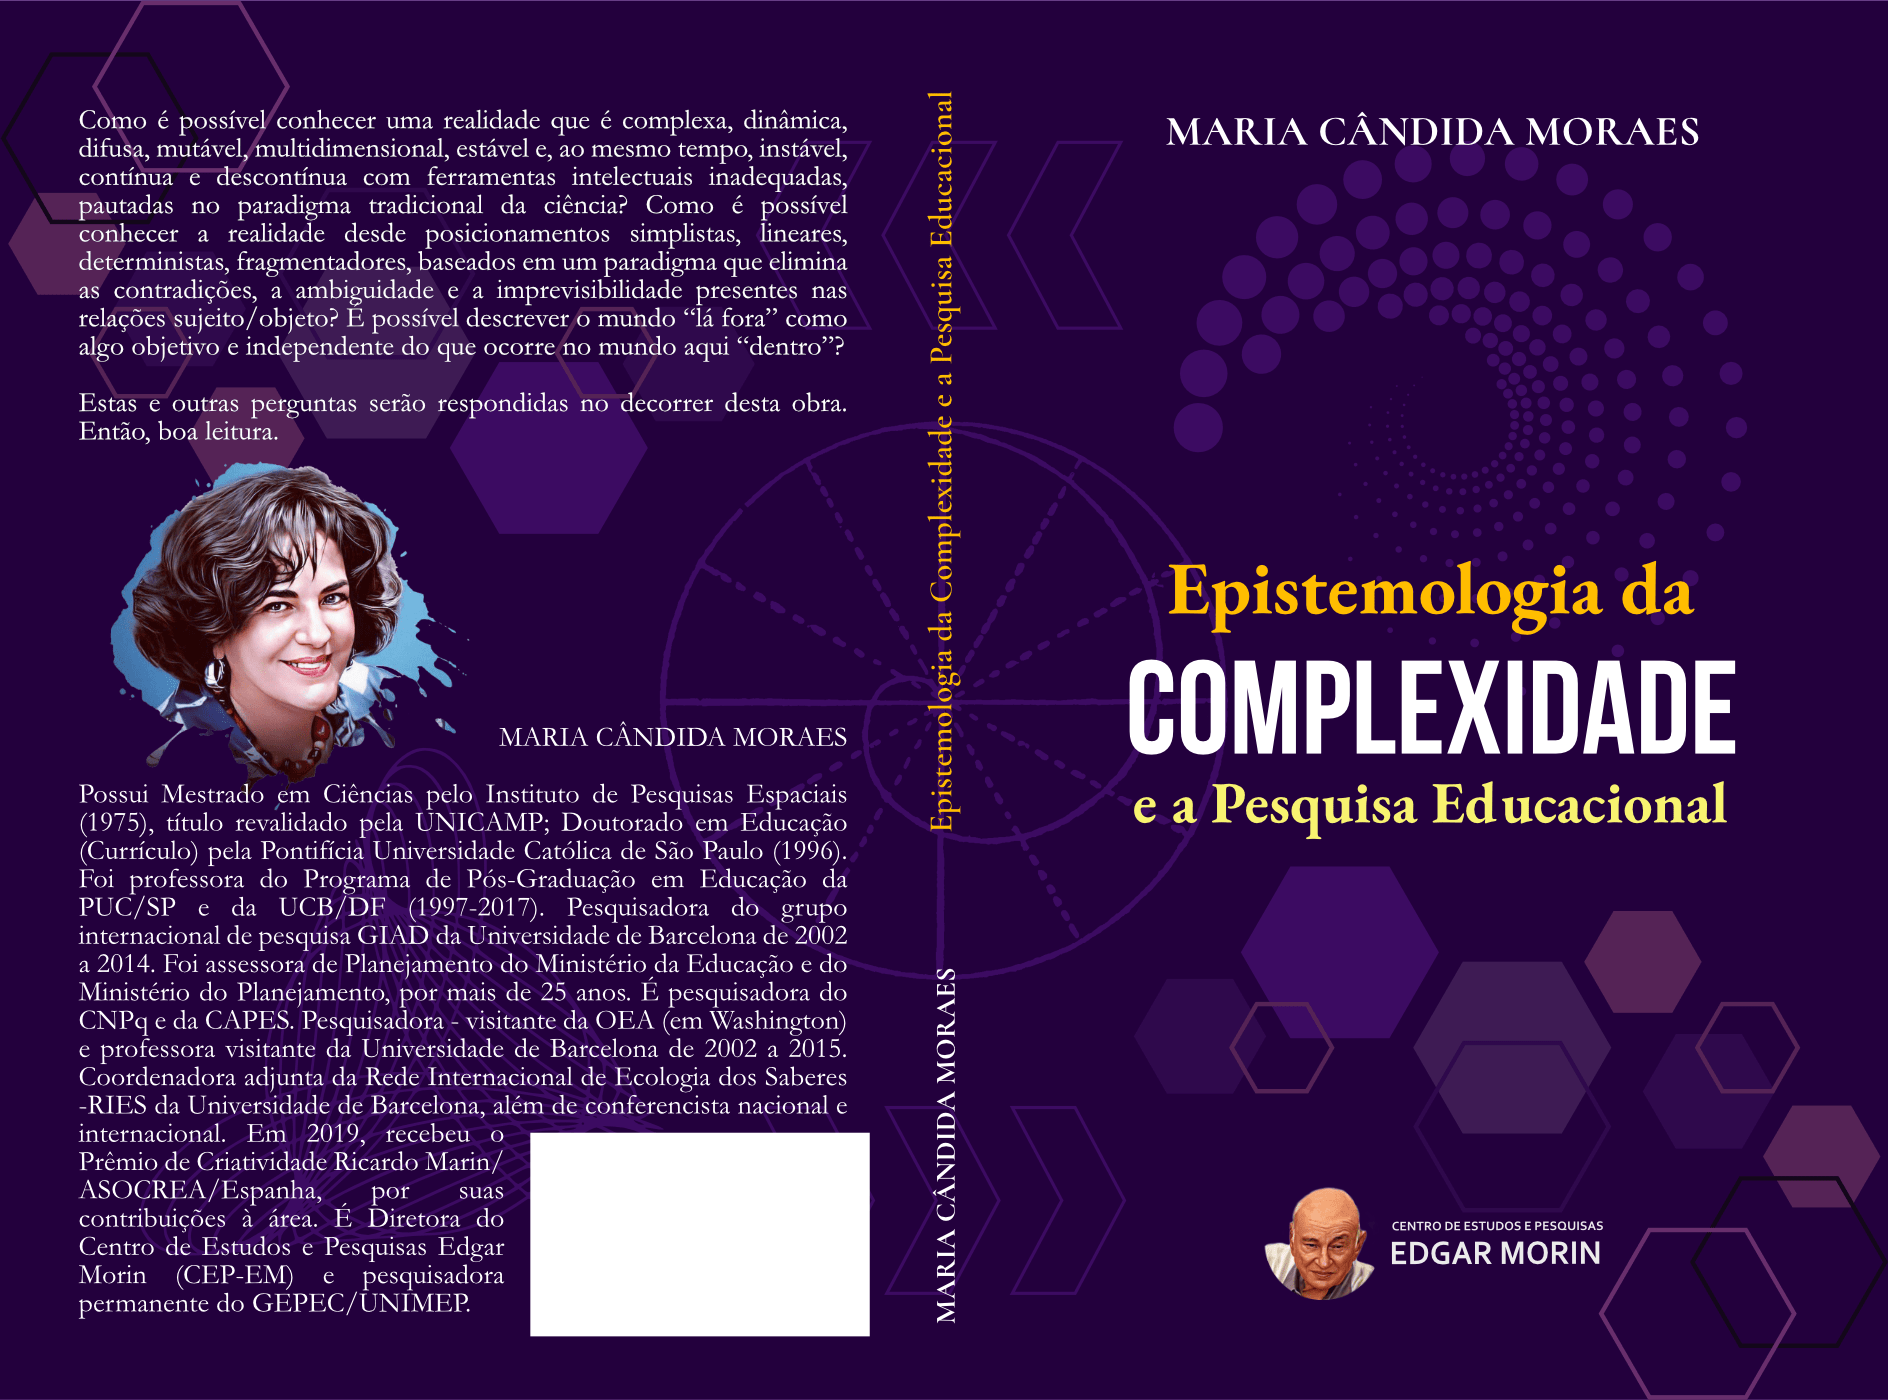 Epist da Complex e a Pesq Educ_Maria C Moraes